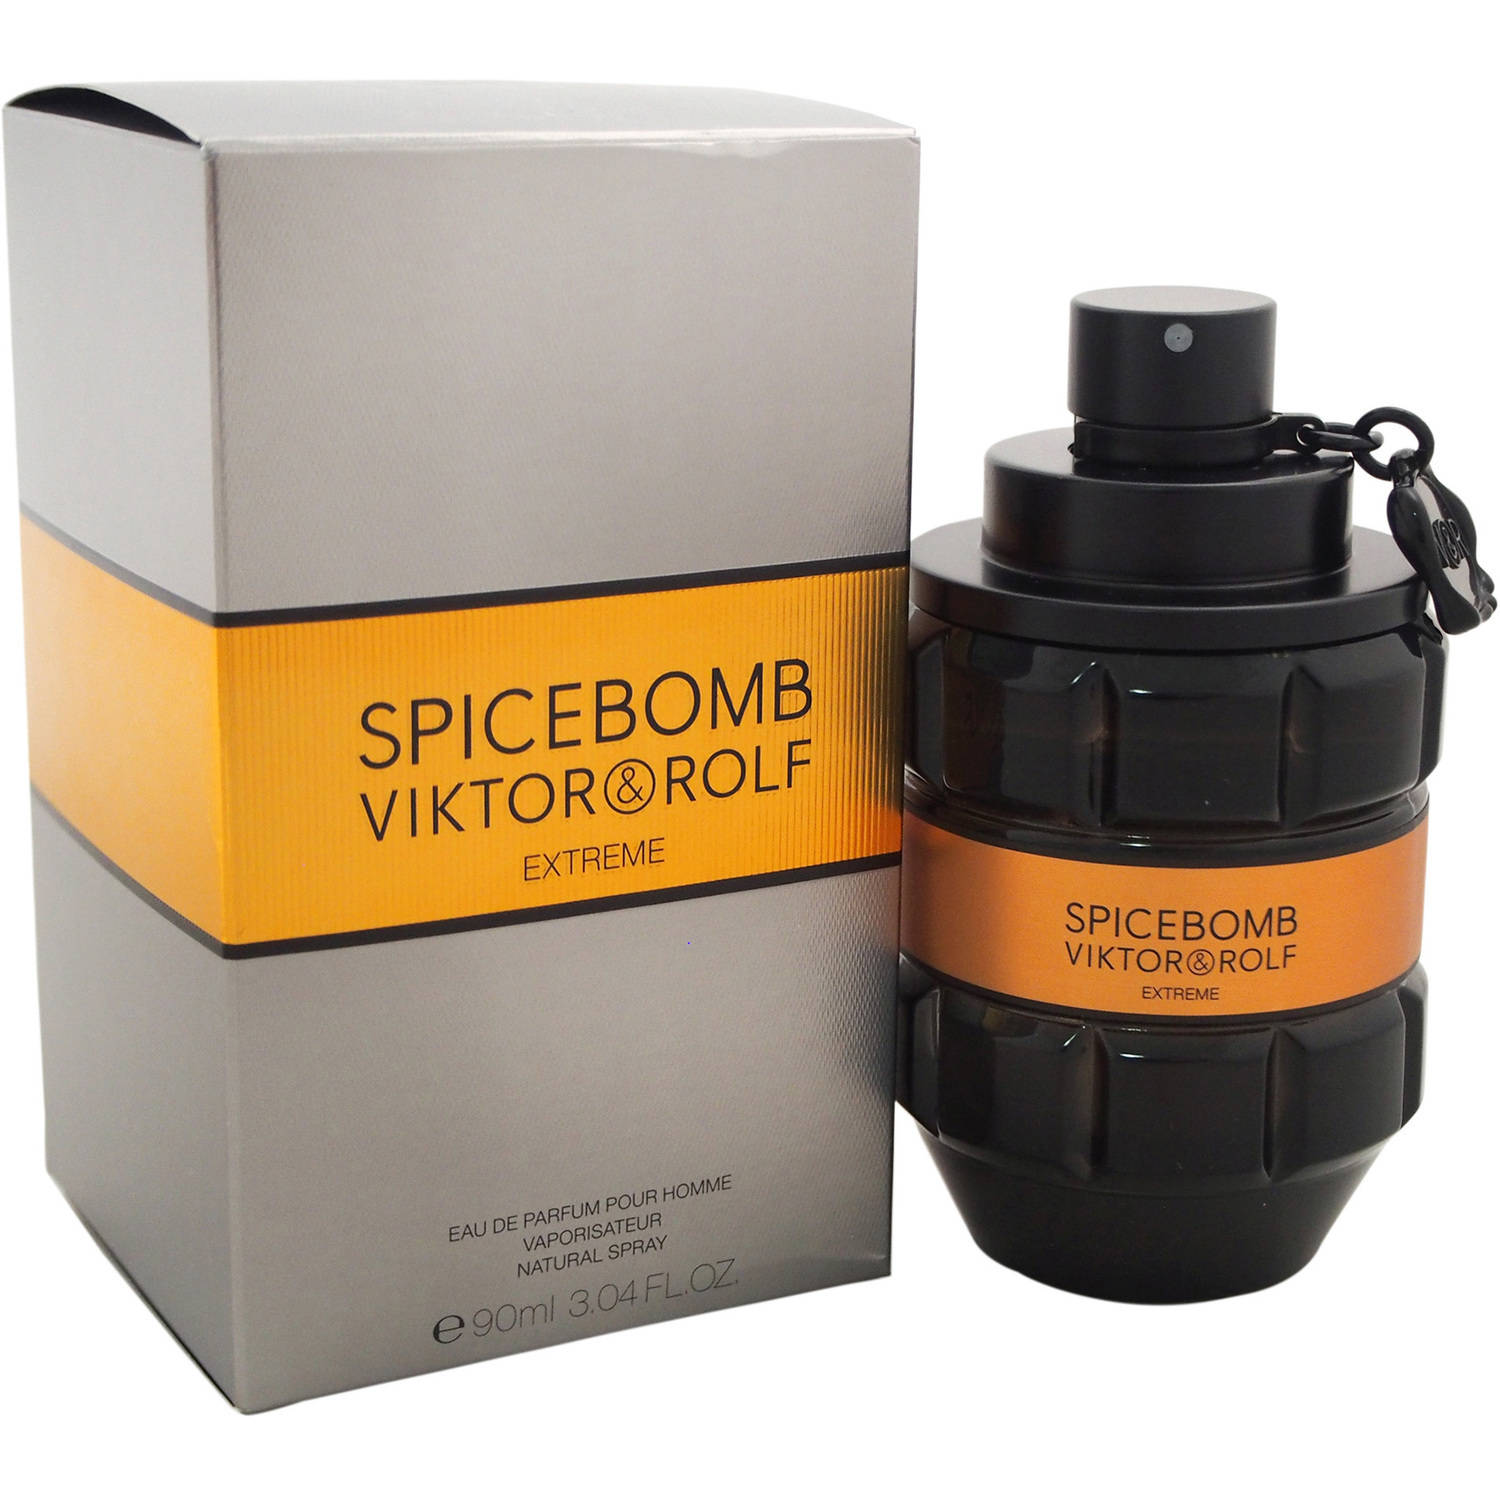 Spicebomb Extreme by Viktor & Rolf for Men, 3.04 oz Algeria